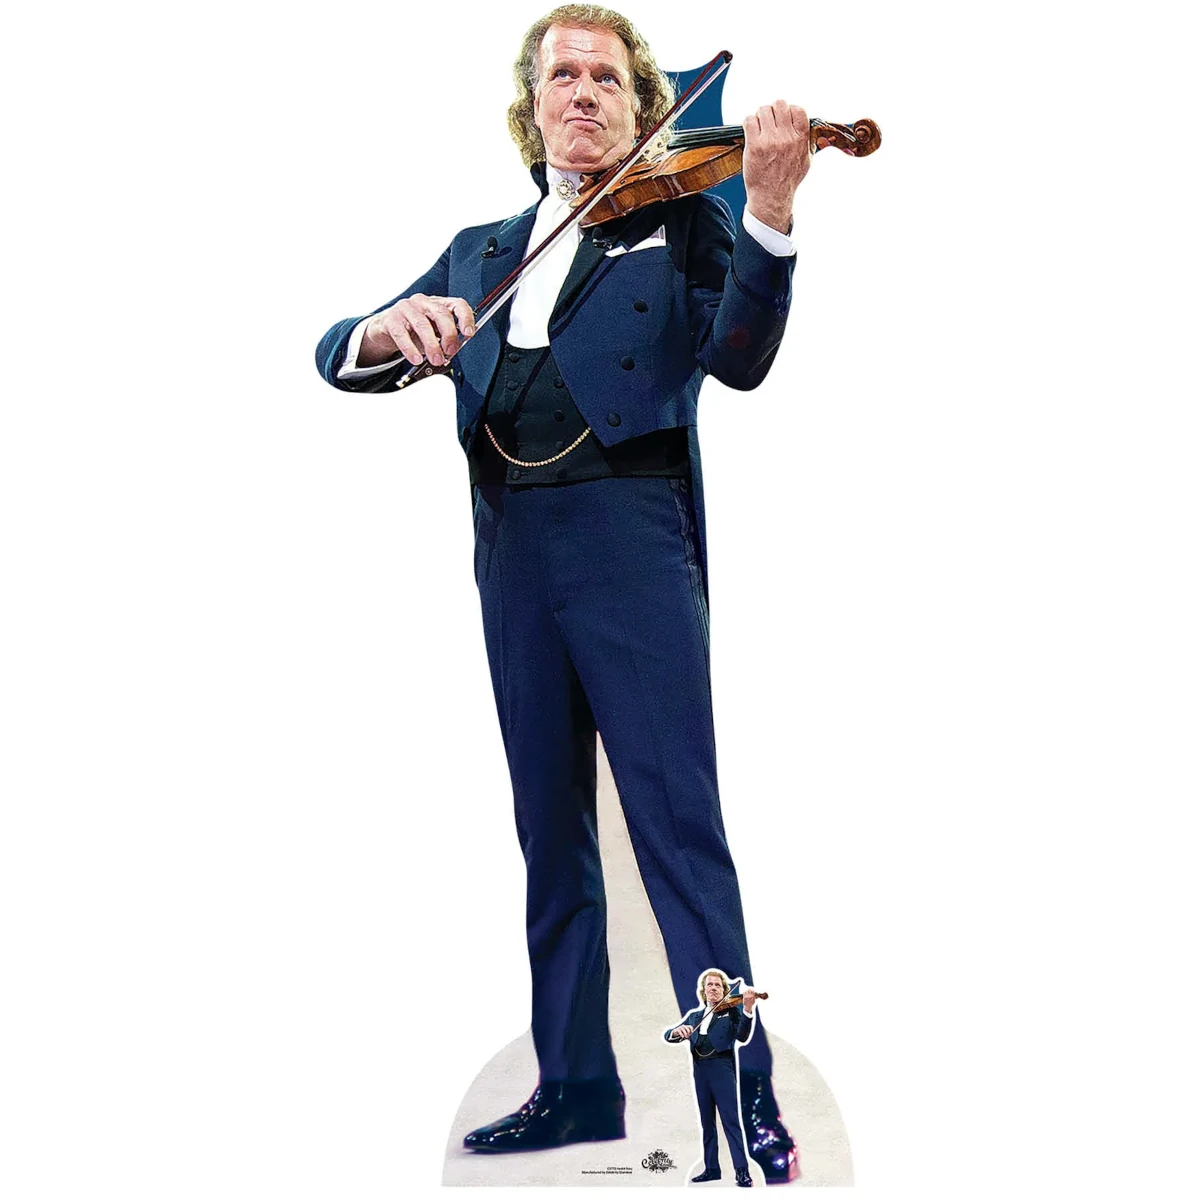 CS772 Andre Rieu 'Playing Violin' (Dutch Violinist) Lifesize + Mini Cardboard Cutout Standee Front